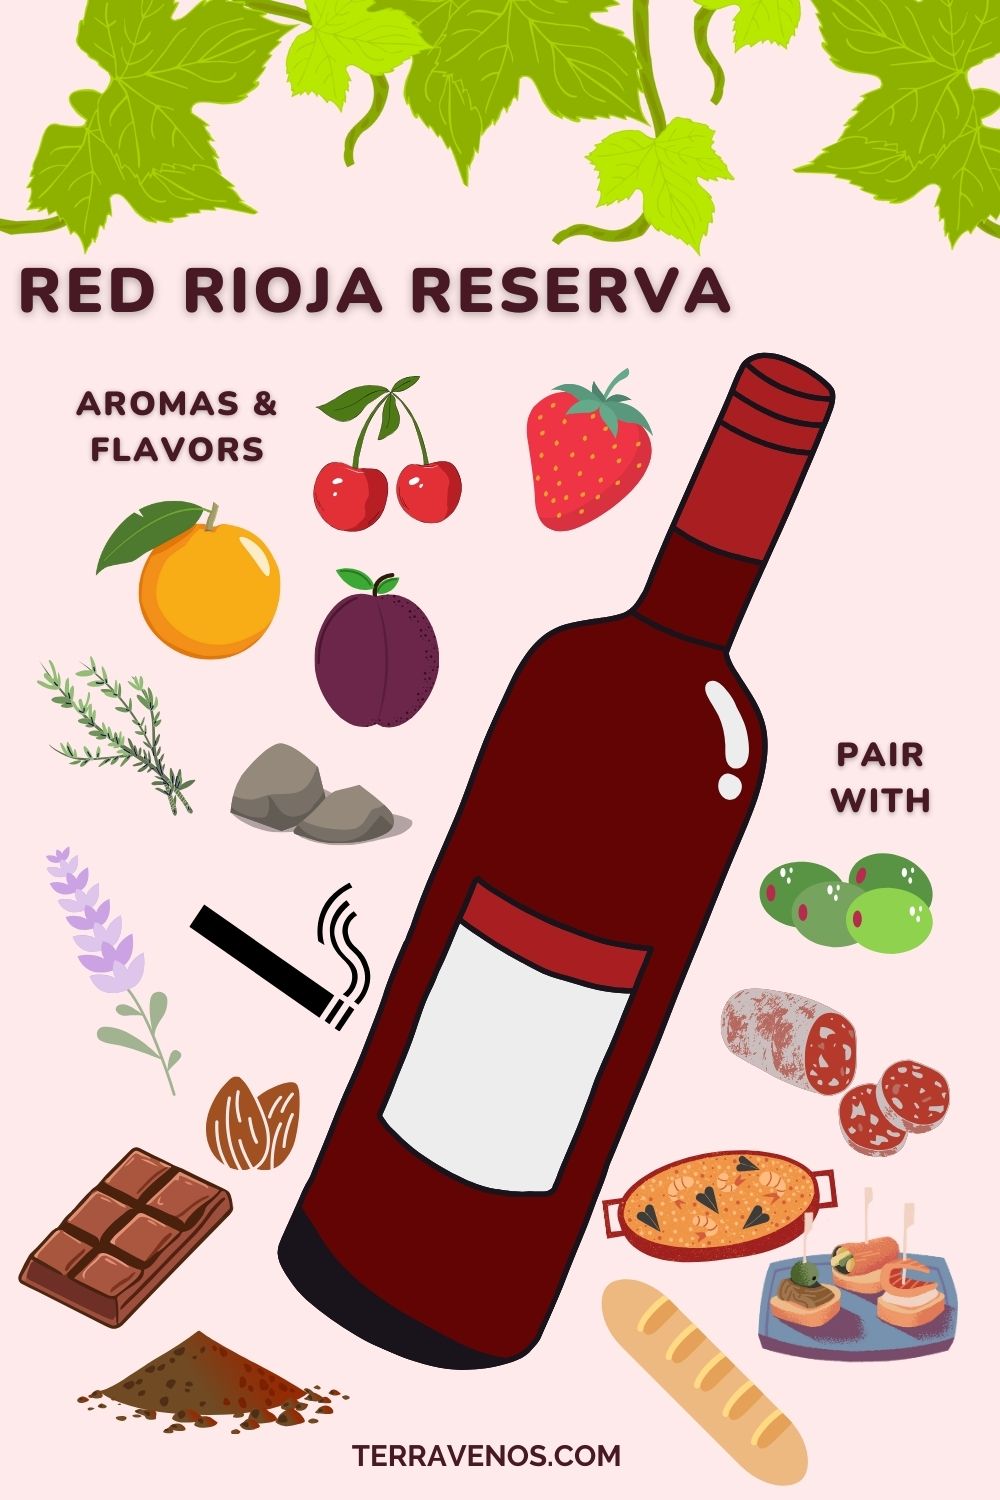 Rioja reserva taste and pairing infographic - Rioja Wine Taste